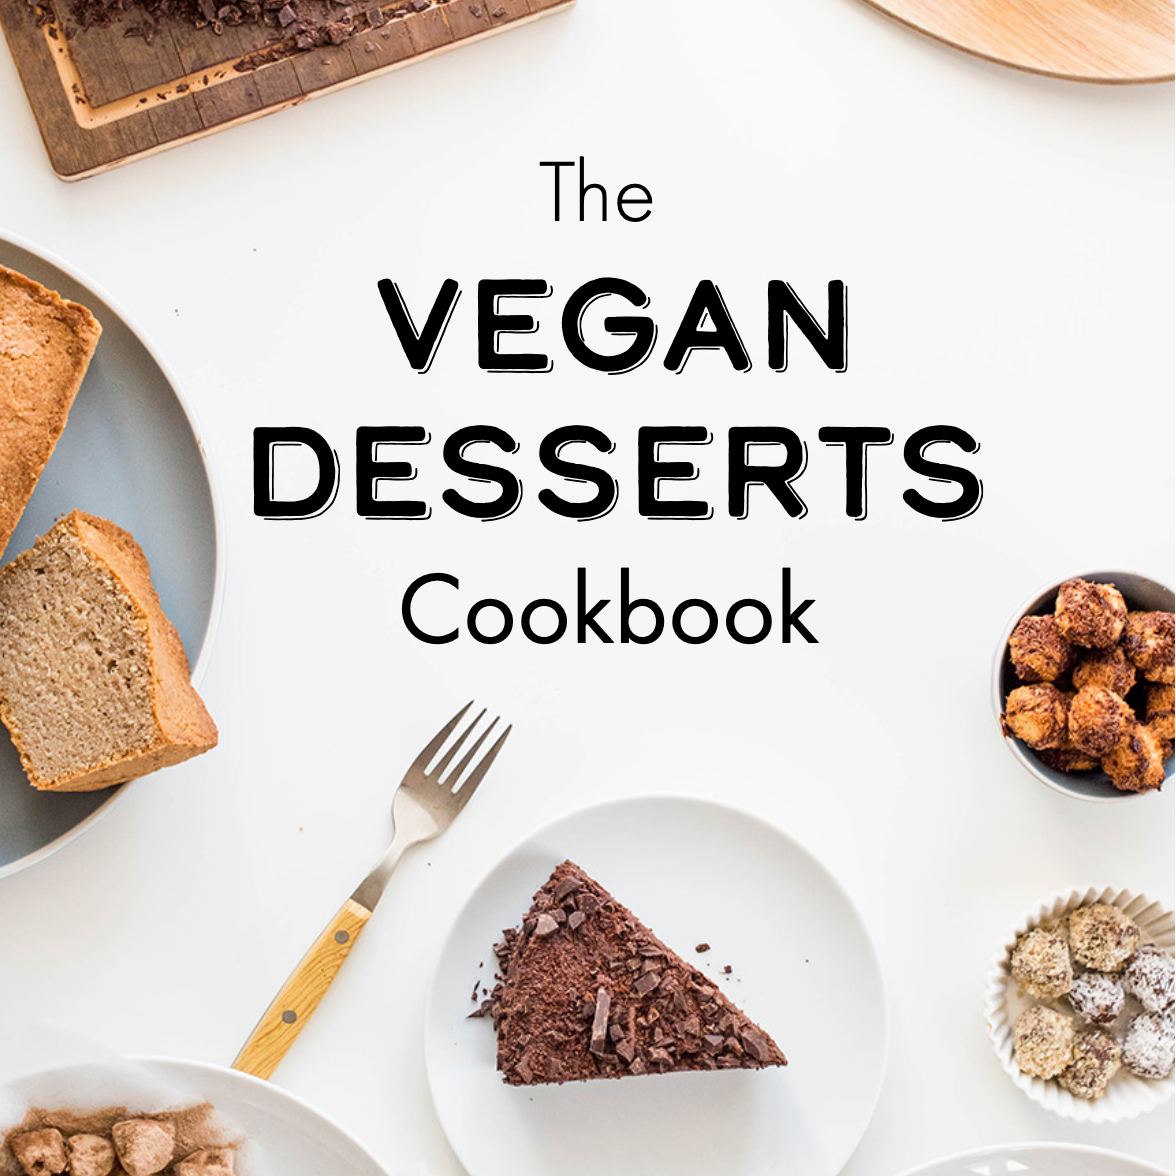 The Vegan Desserts Cookbook